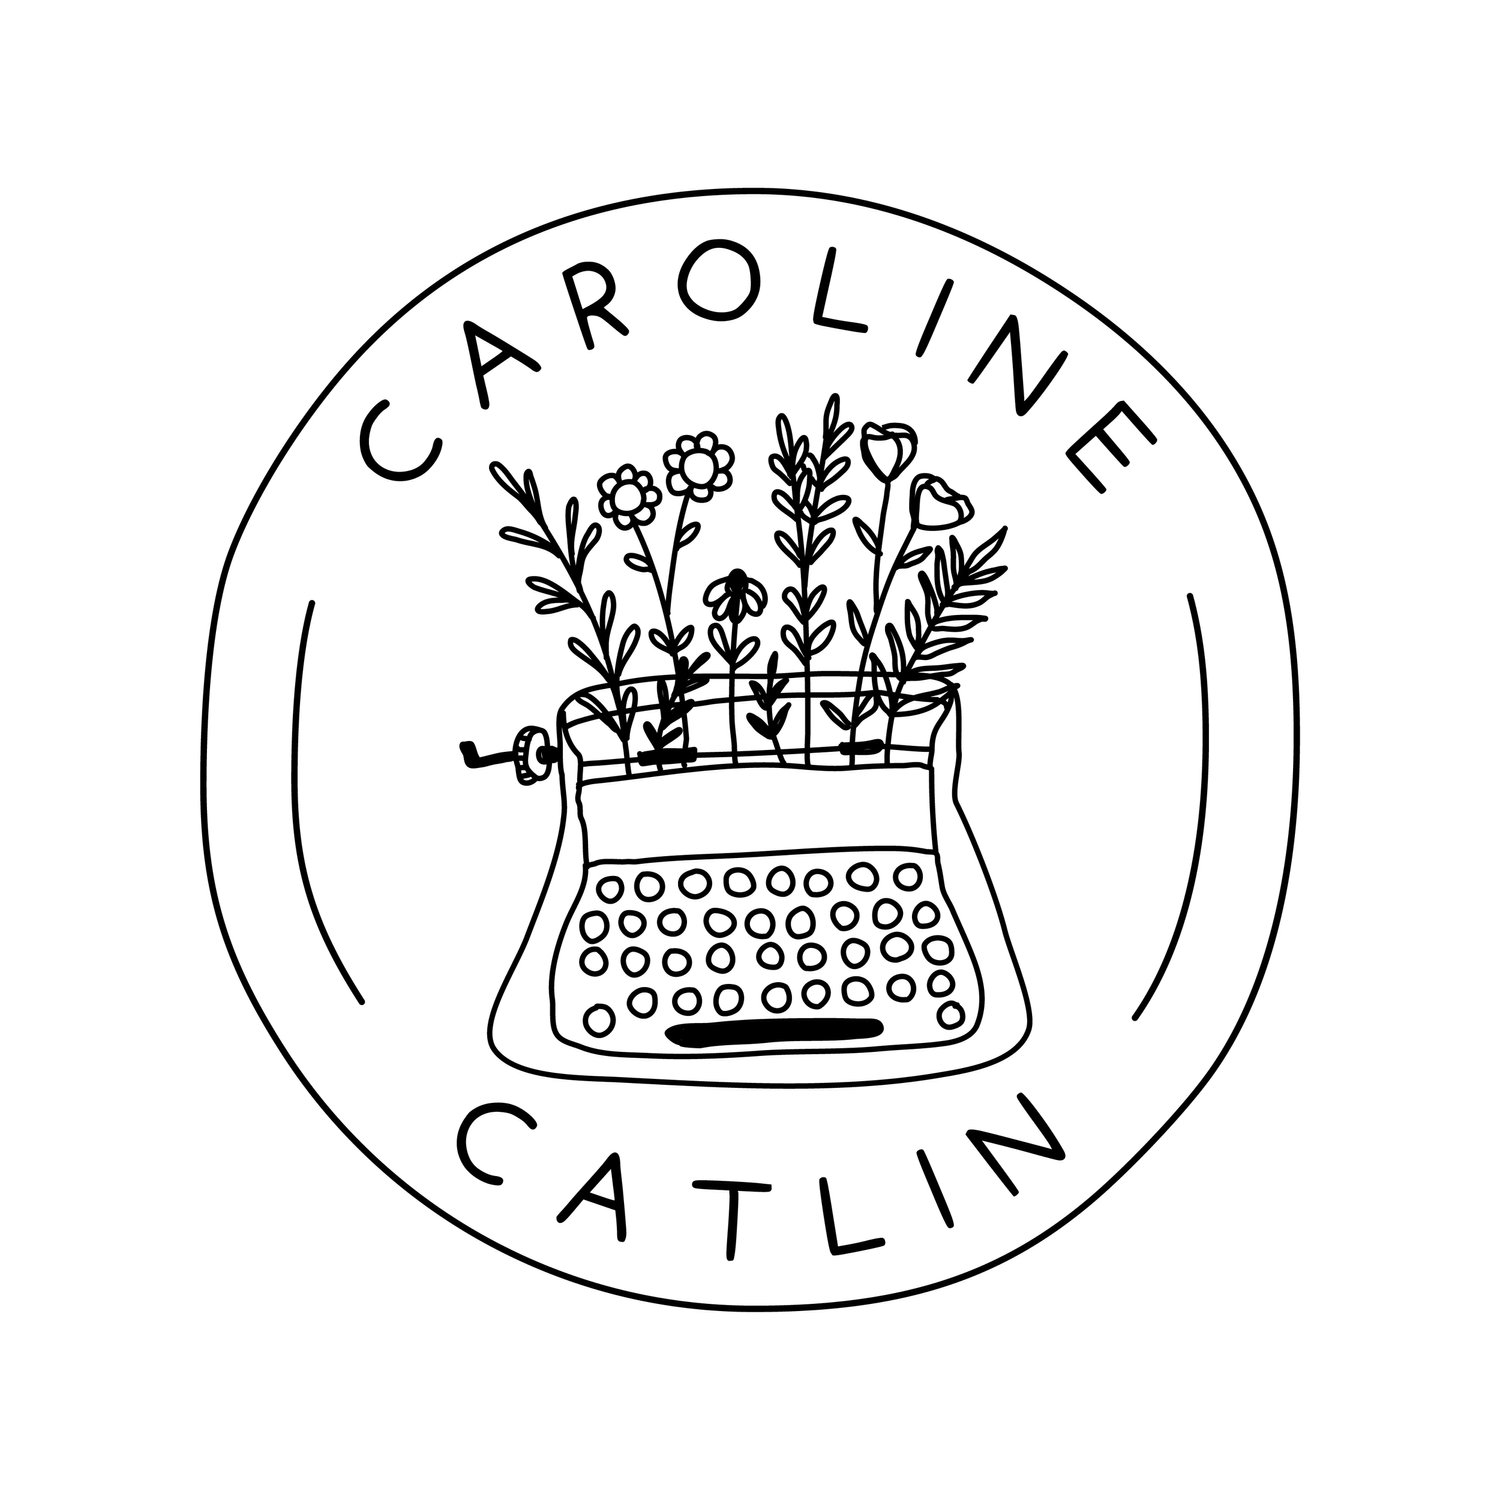 caroline catlin